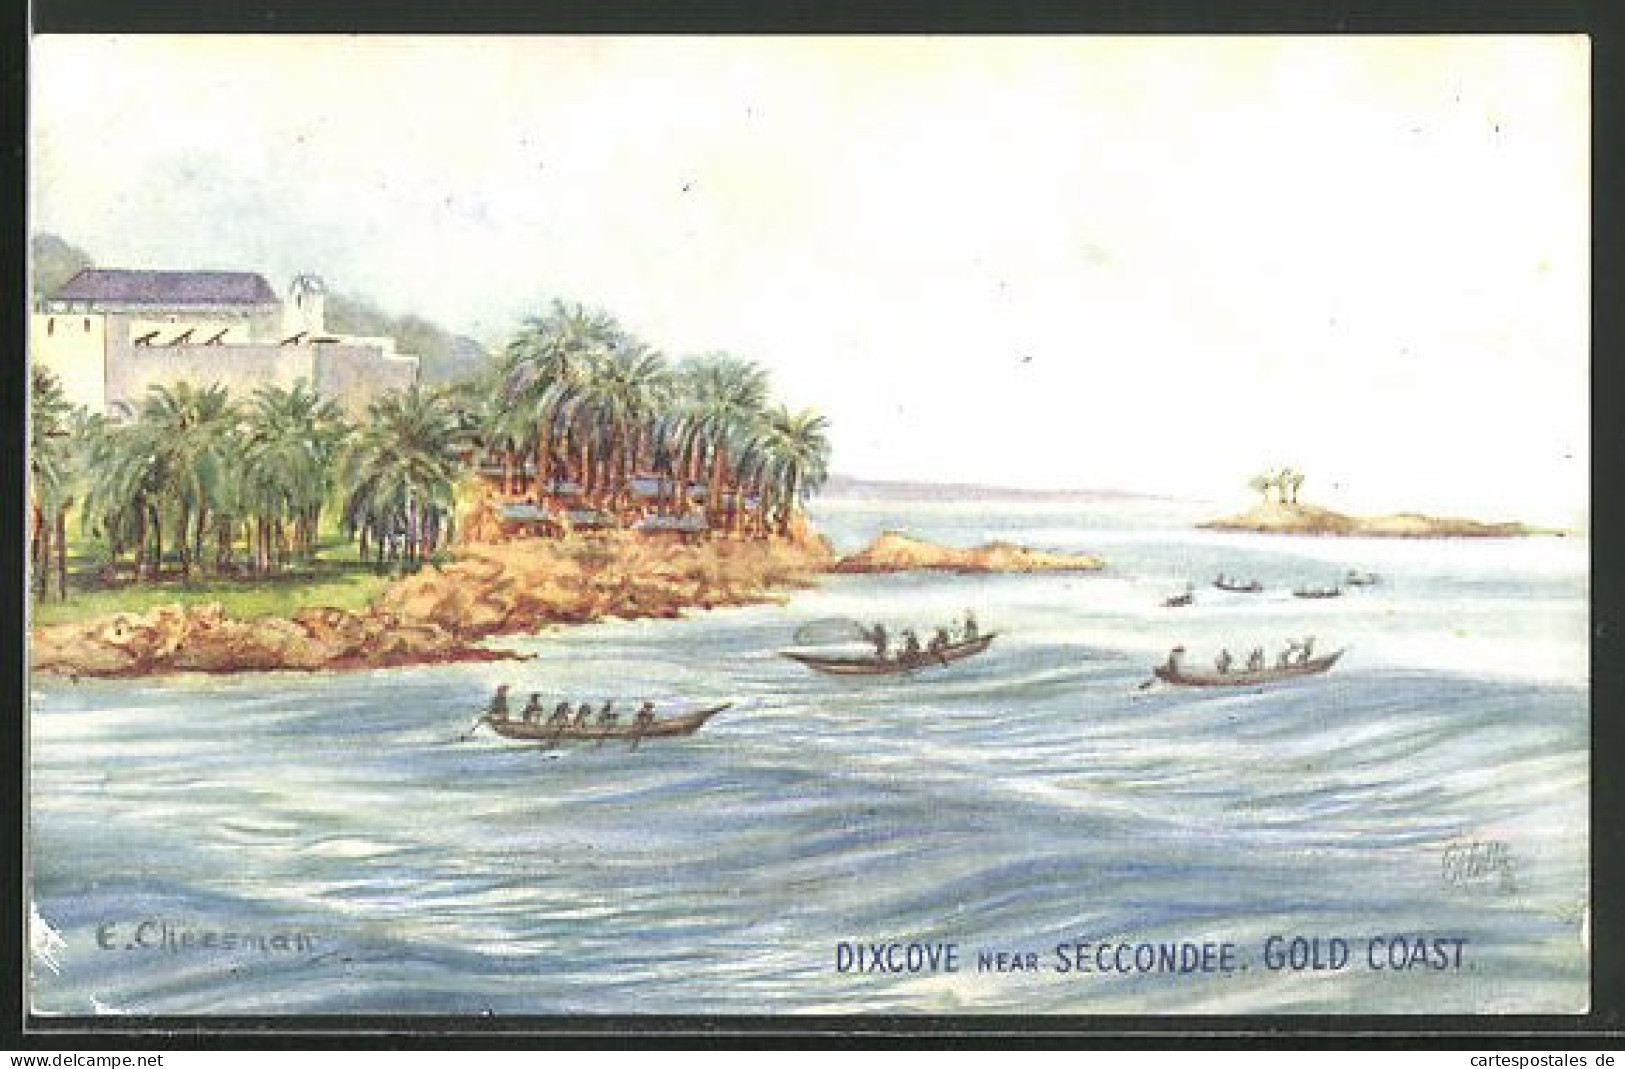 CPA Illustrateur Seccondee /Gold Coast, Dixcove Near Seccondee  - Ghana - Gold Coast